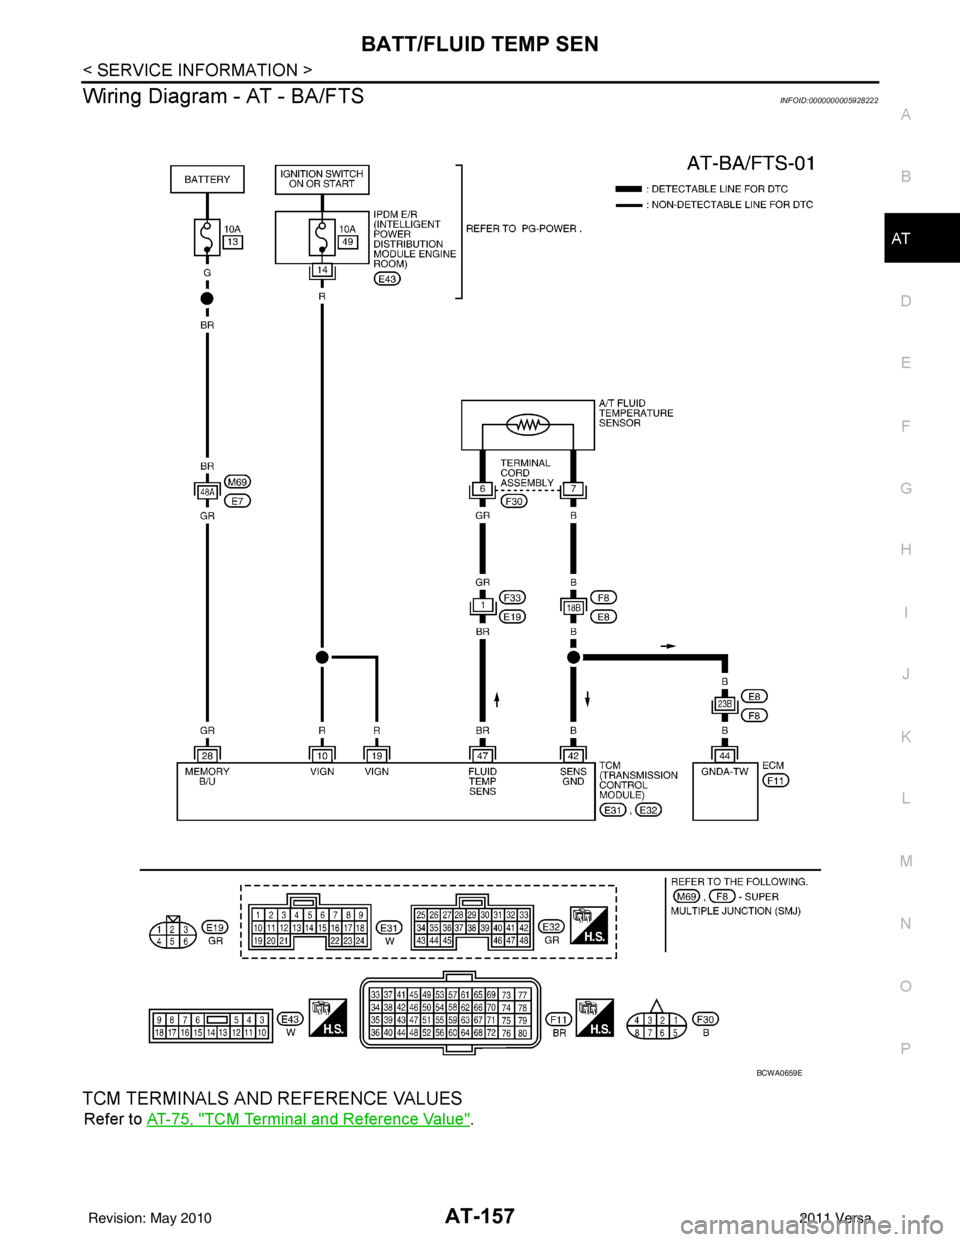 NISSAN LATIO 2011  Service Repair Manual BATT/FLUID TEMP SENAT-157
< SERVICE INFORMATION >
DE
F
G H
I
J
K L
M A
B
AT
N
O P
Wiring Diagram - AT - BA/FTSINFOID:0000000005928222
TCM TERMINALS AND REFERENCE VALUES
Refer to  AT-75, "TCM Terminal 